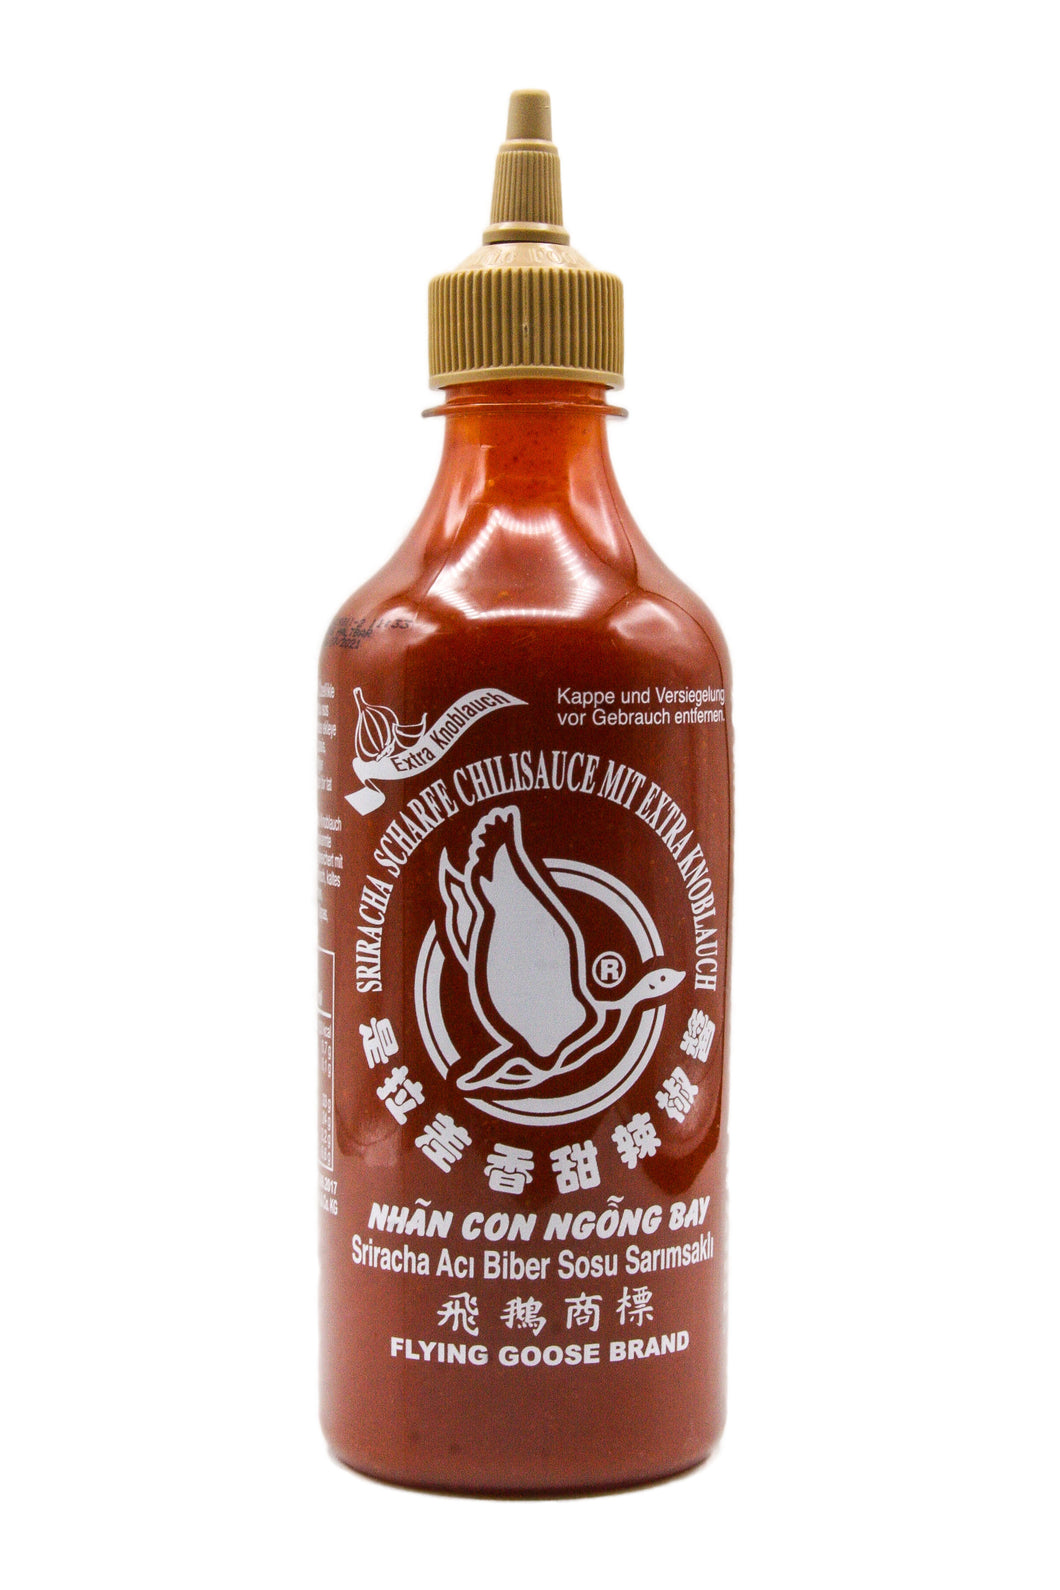 Flying Goose Sriracha Chili Sauce scharf mit Knoblauch